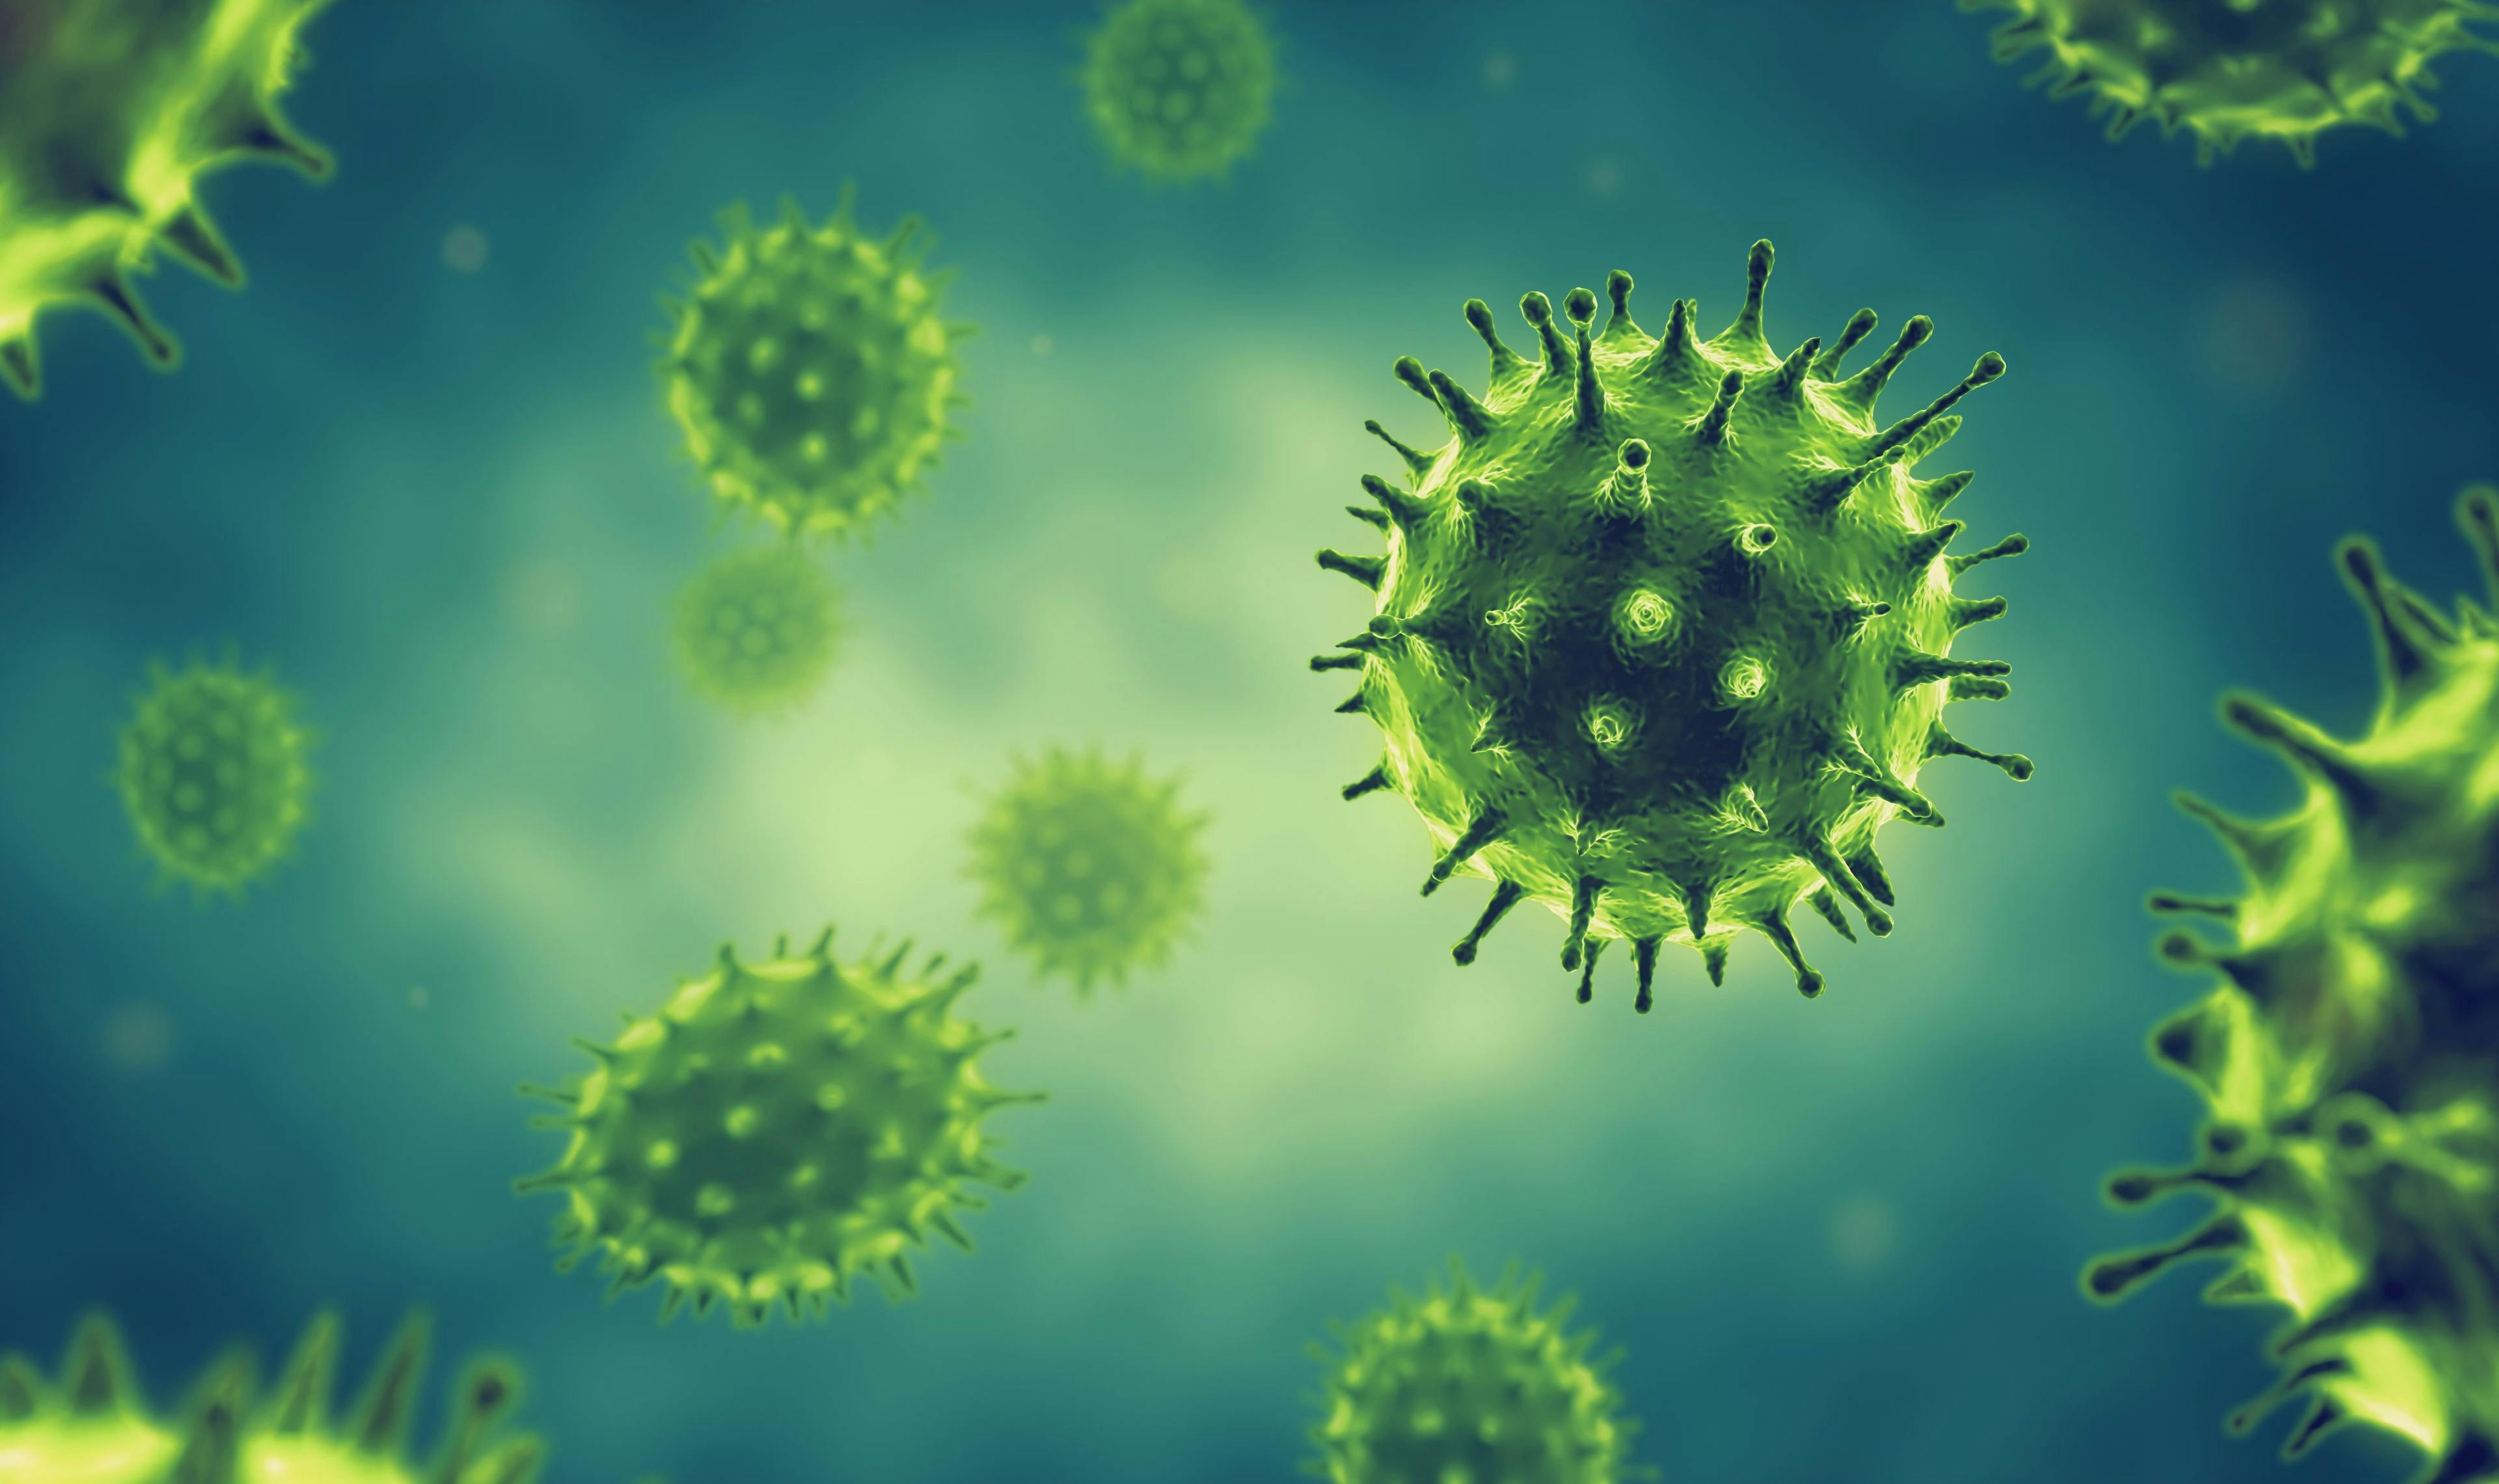 Covid 19 or Influenza or monkeypox virus cells. | Image Credit: © Feydzhet Shabanov - stock.adobe.com